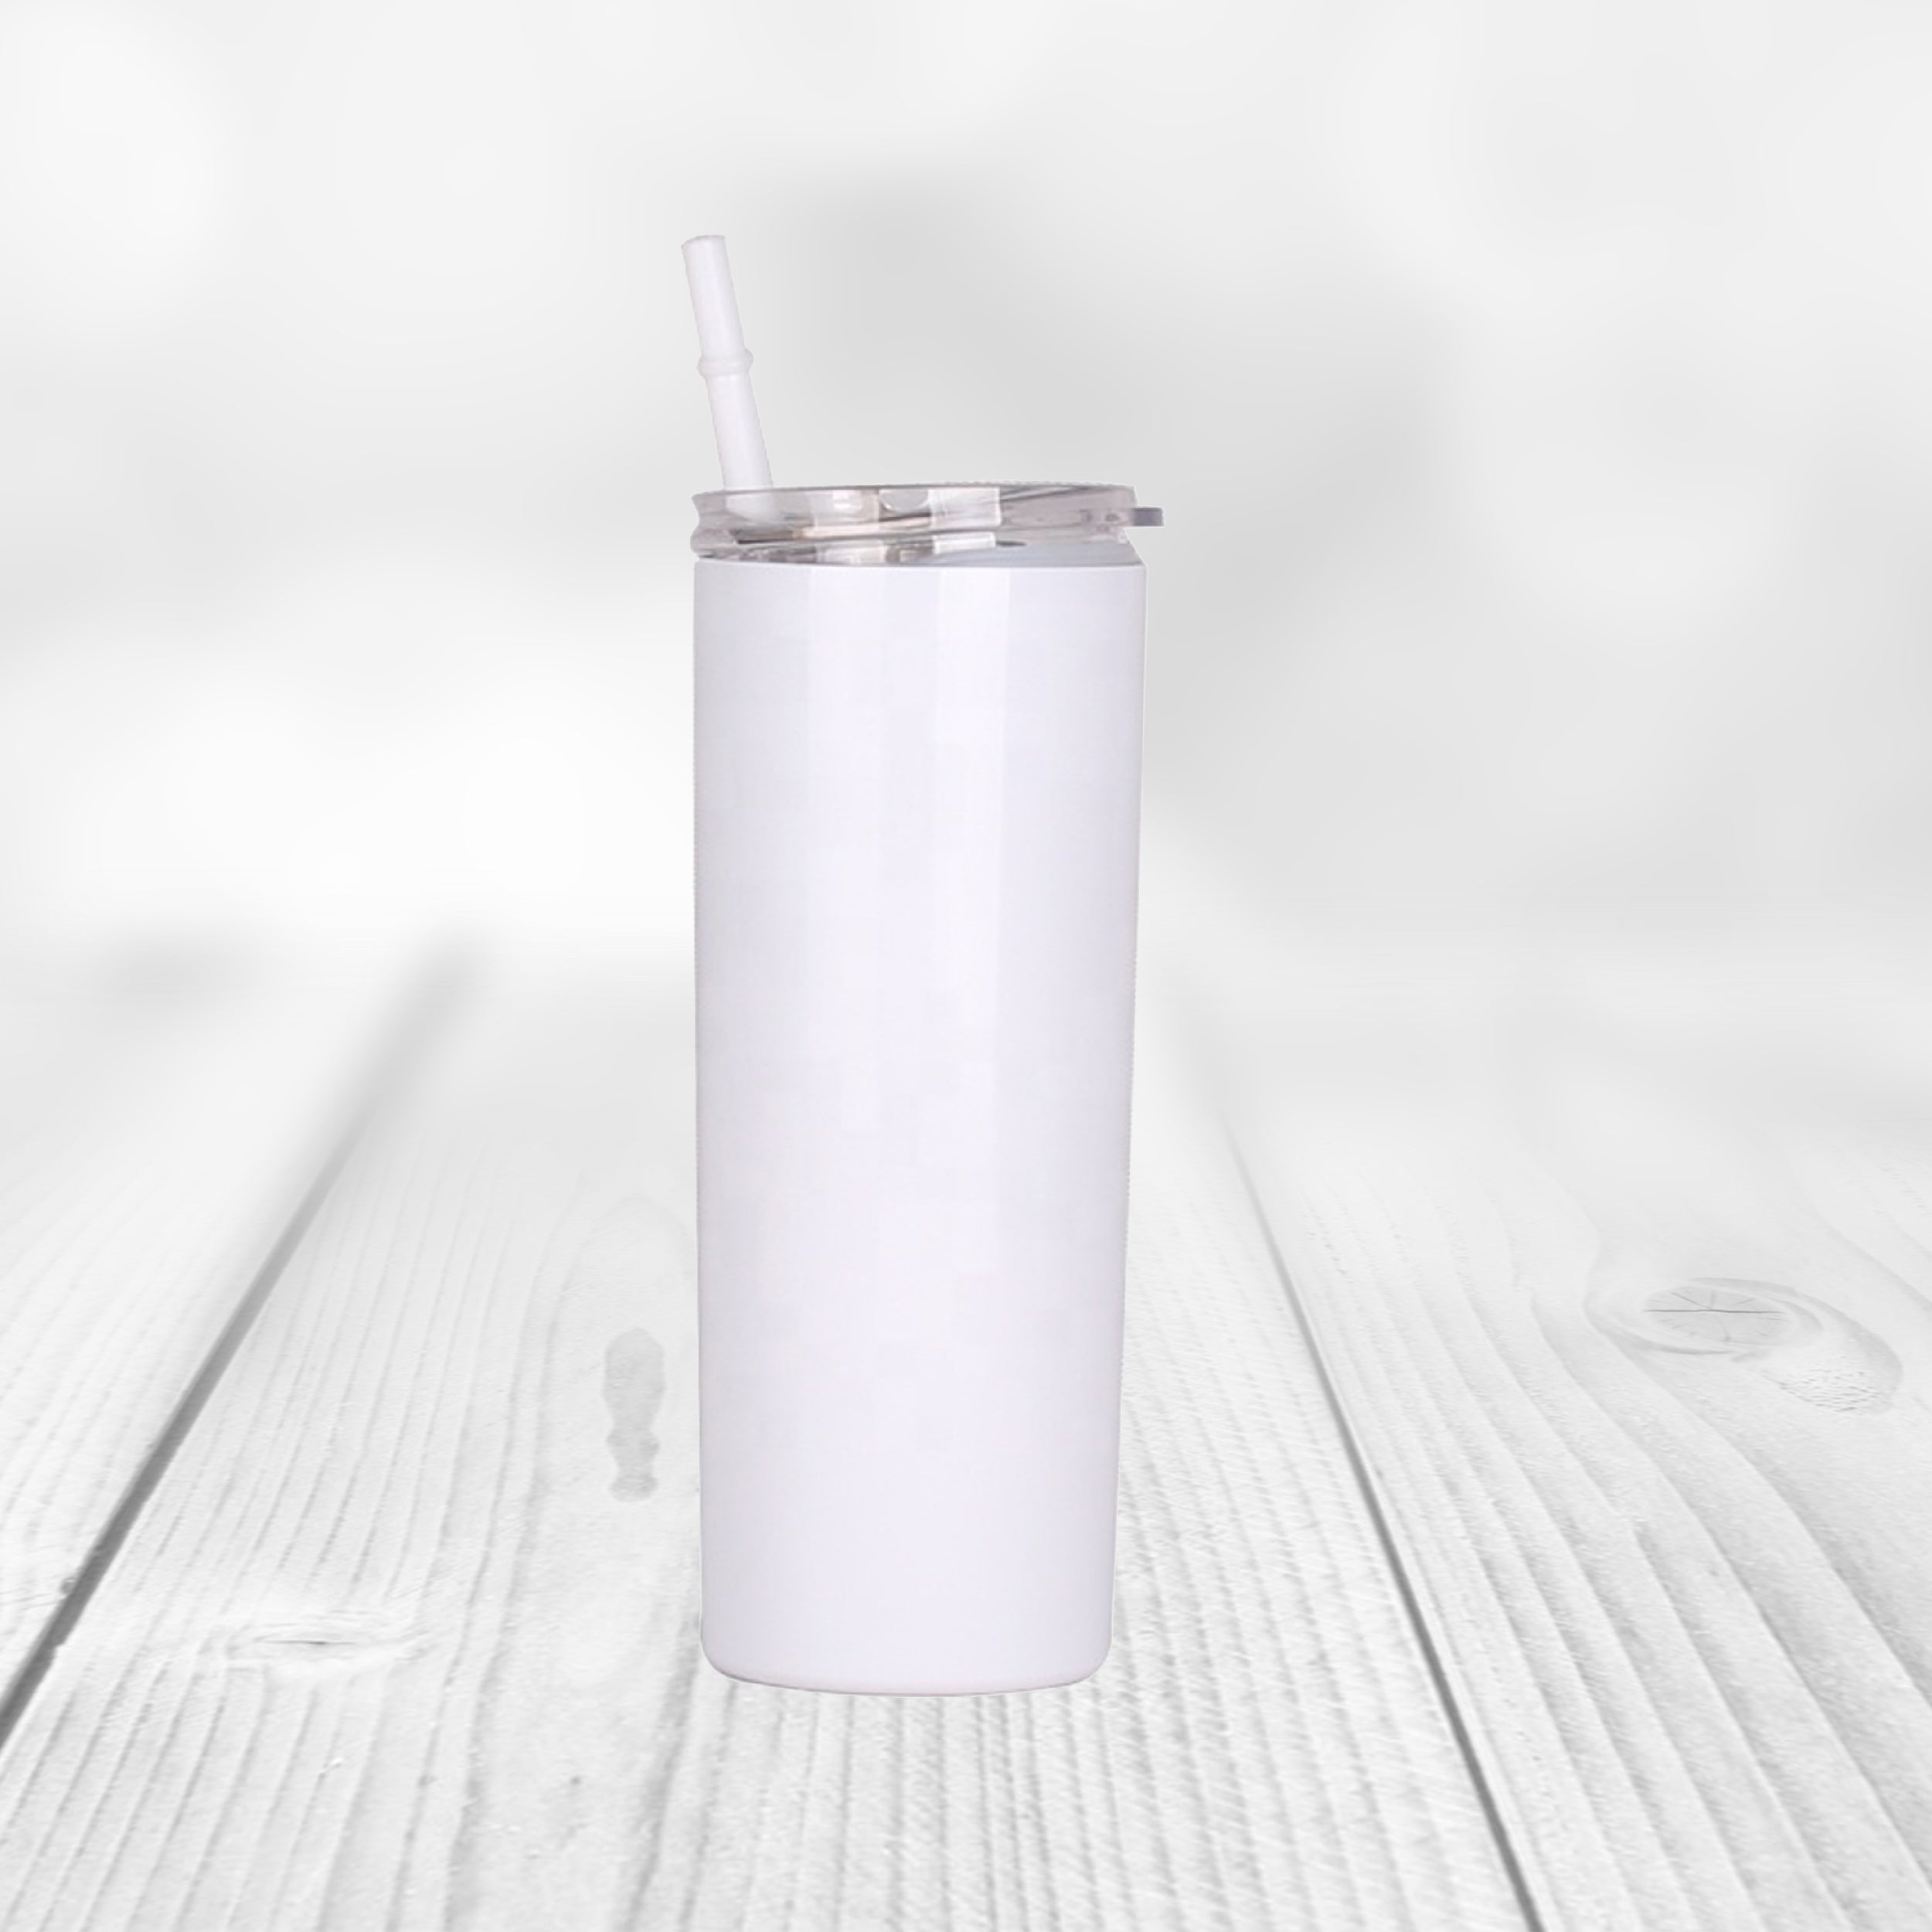 USA free shipping blank sublimation tumblers with plastic straw wholesale  20 oz straight mug for Christmas and wedding gift box